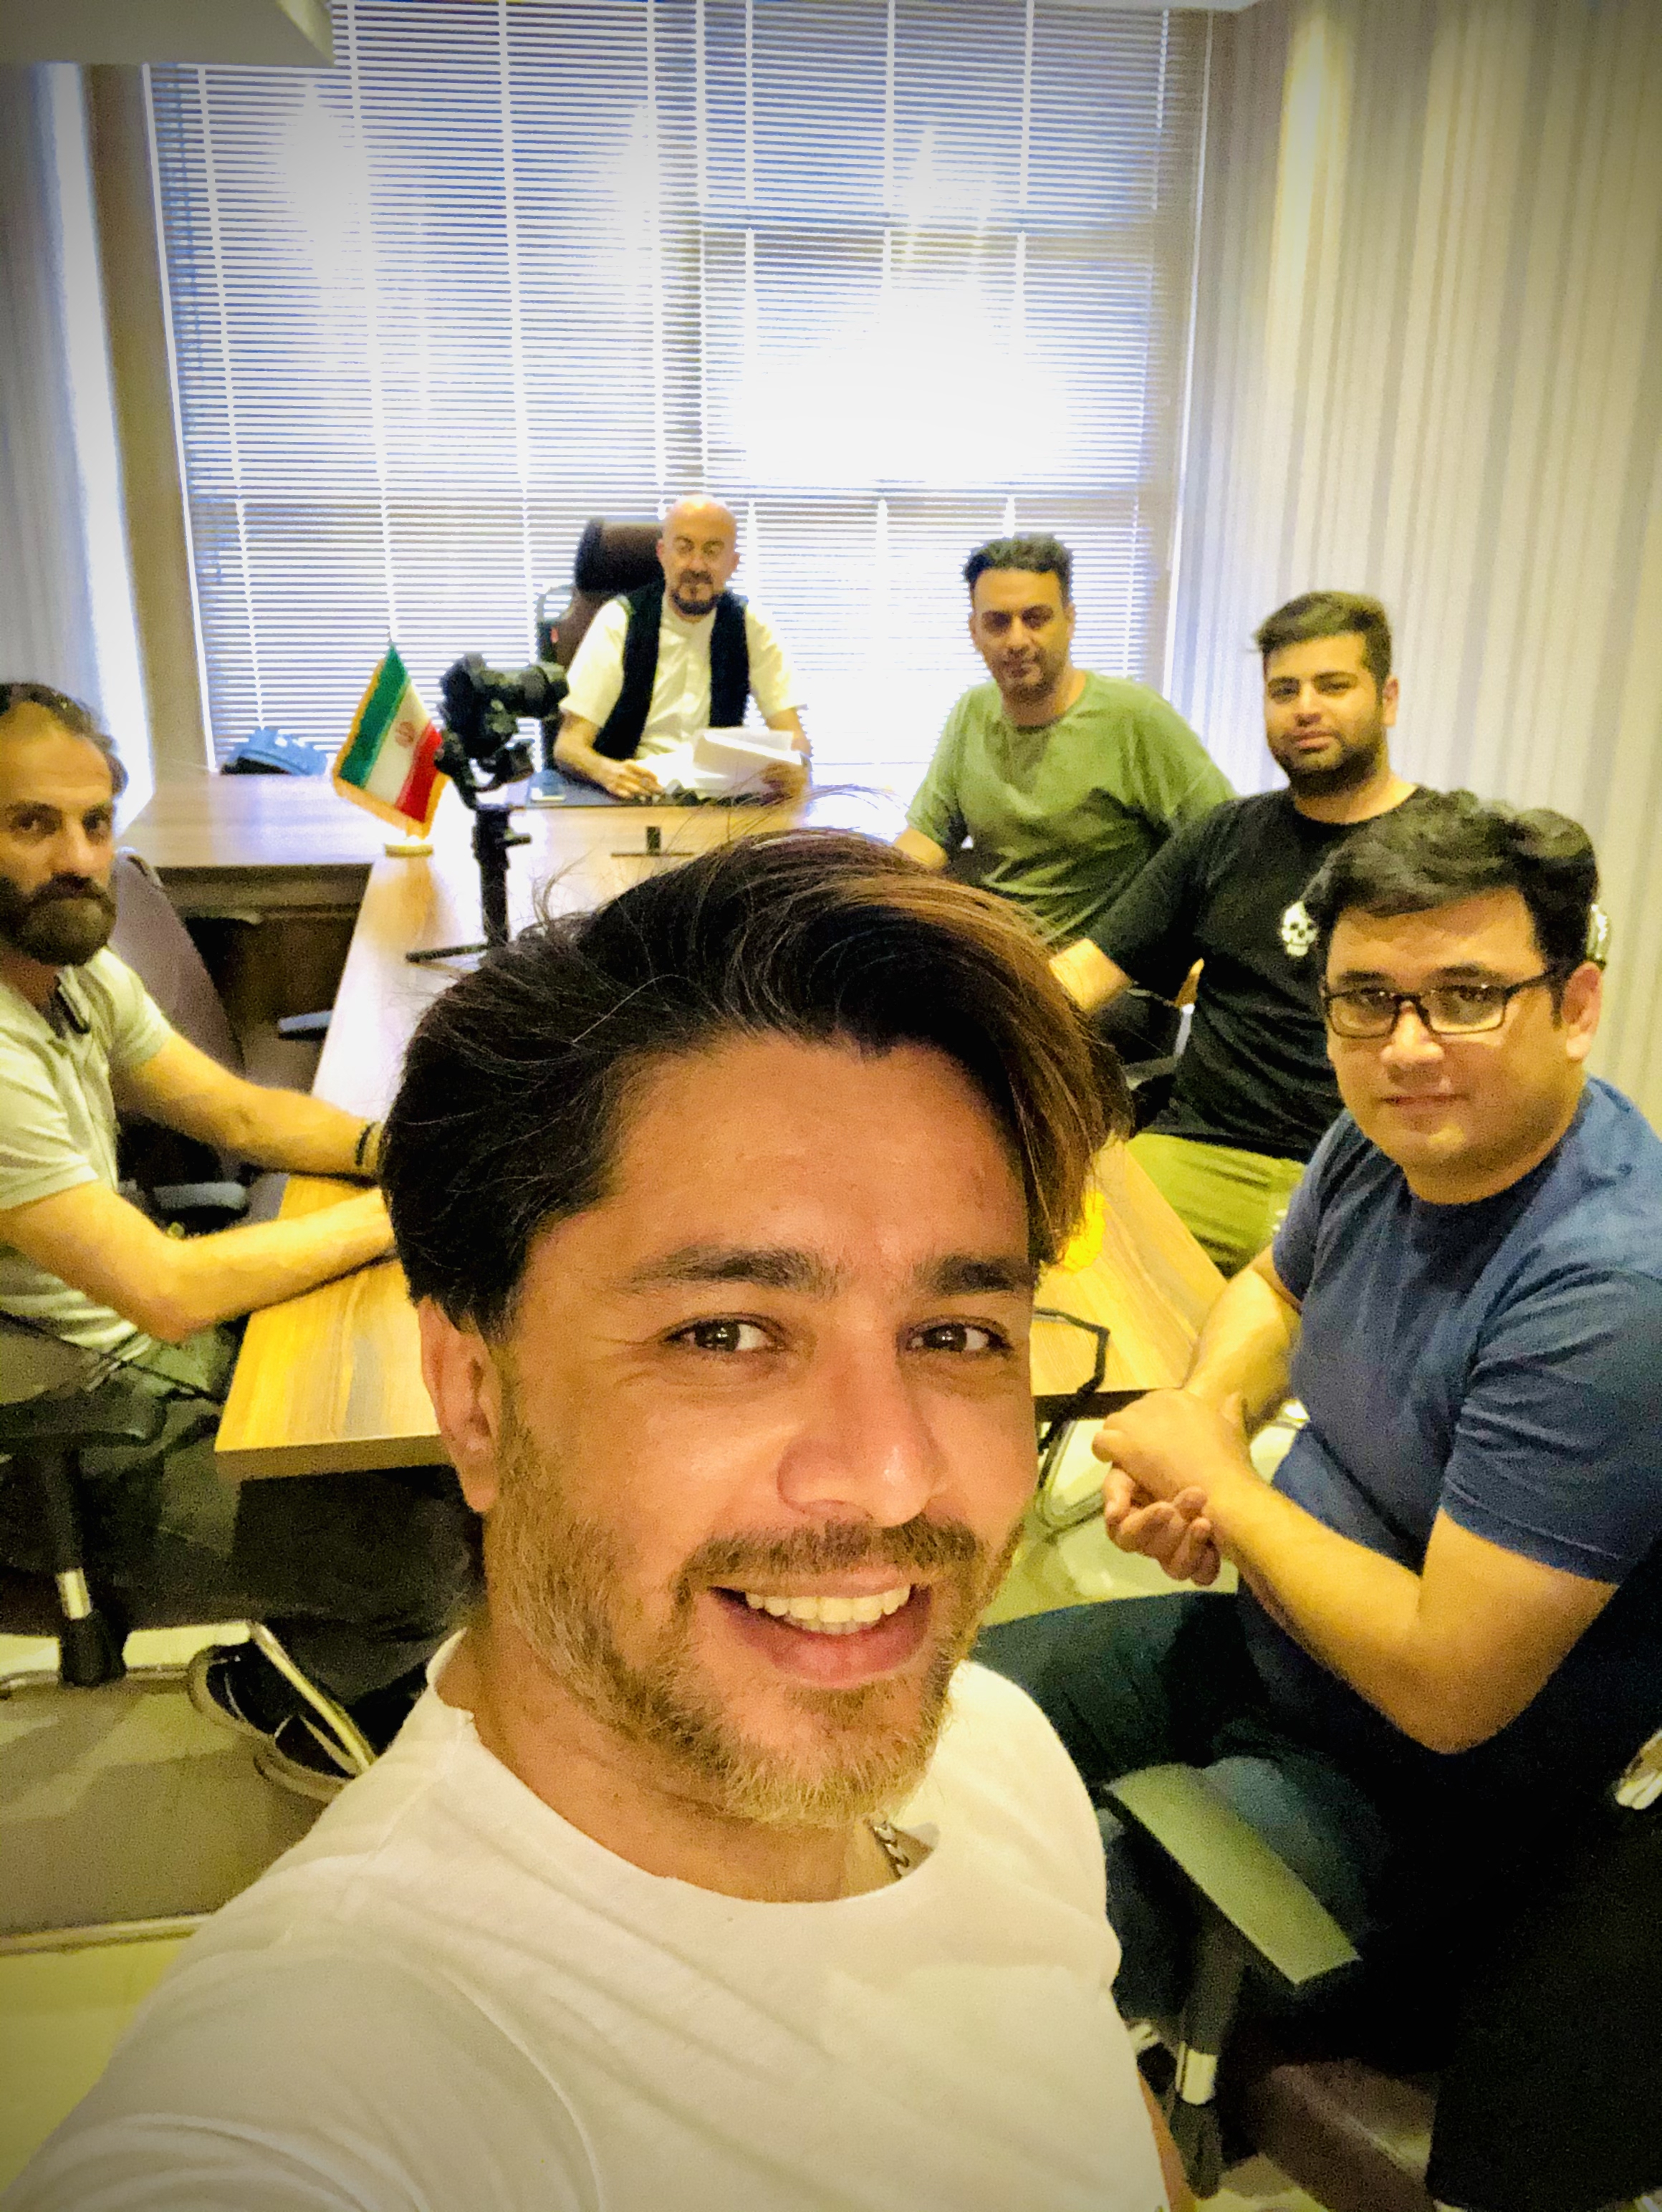 arash bahmani and his team in a meeting before the recording a tv program -- آرش بهمنی کارگردان و تیم همراه در جلسه قبل از شروع ضبط برنامه تلویزیونی